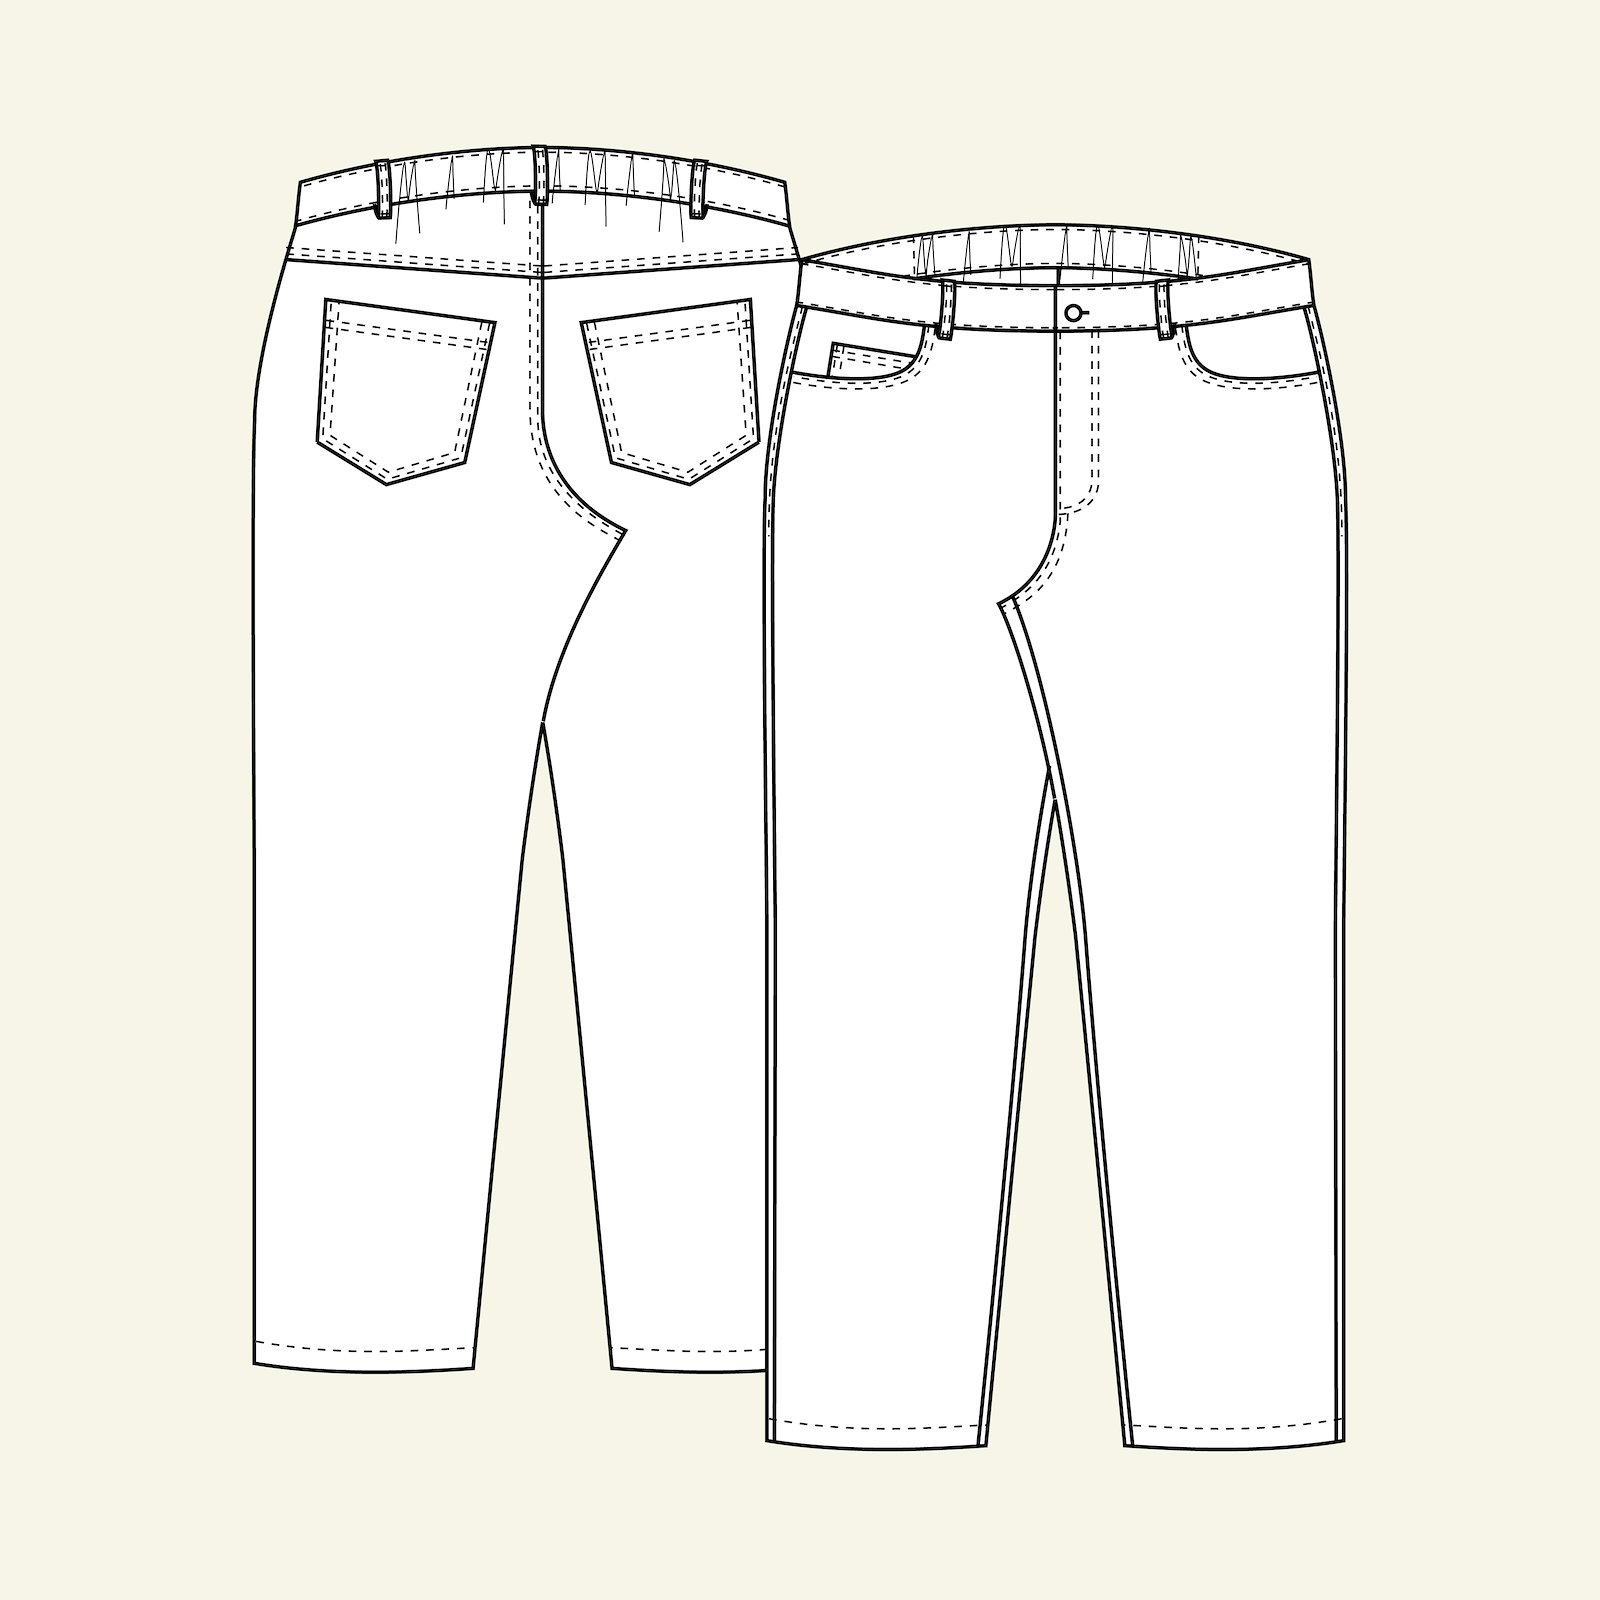 Klassisch Jeans mit Gummiband hinter, 56 p70007000_p70007001_p70007002_p70007003_p70007004_pack_b